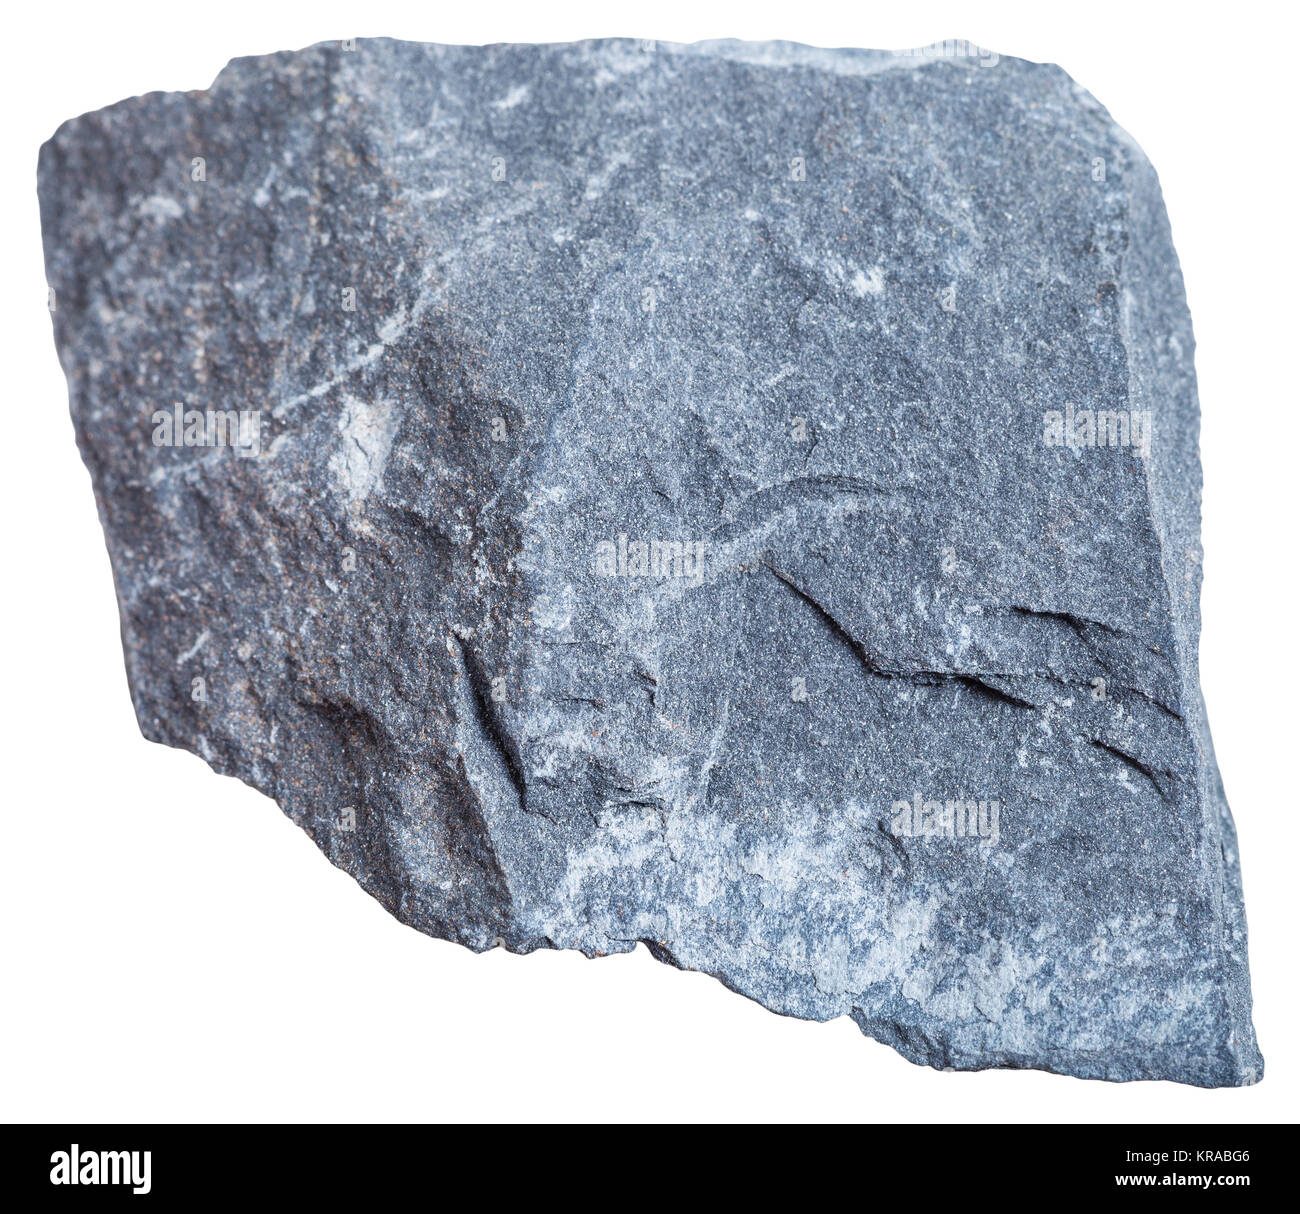 Argillite (mudstone) stone isolated on white Stock Photo